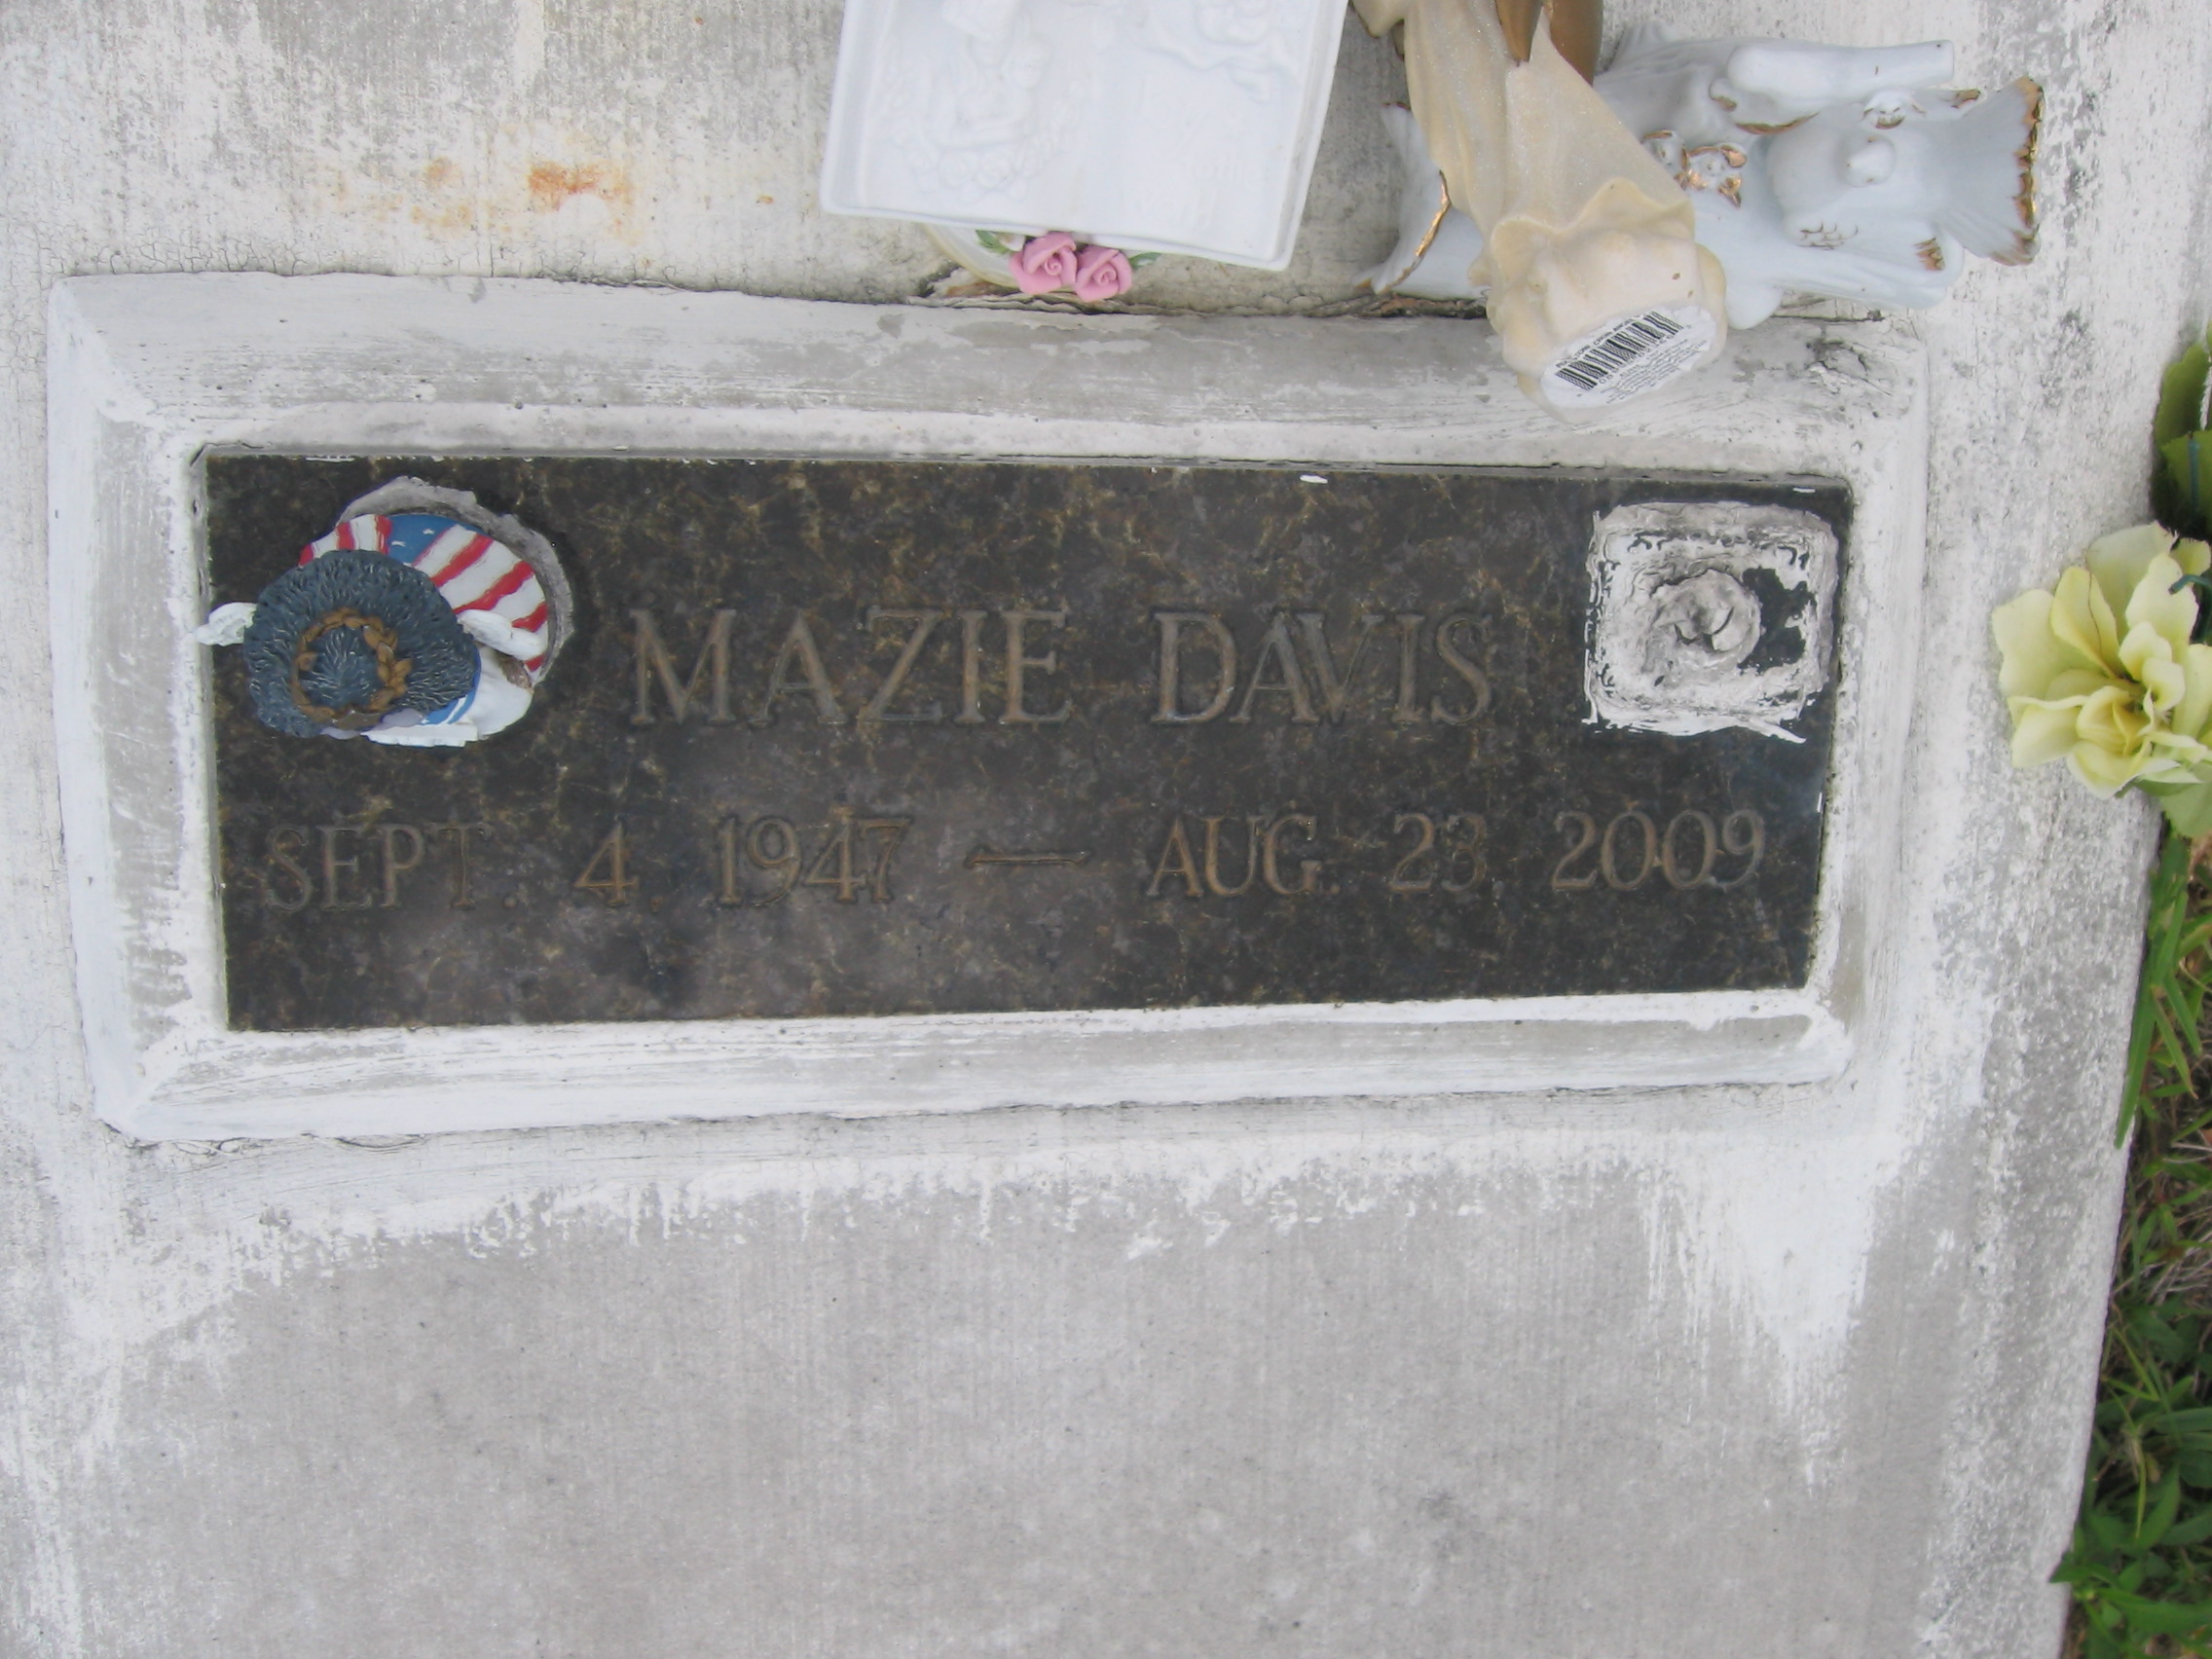 Mazie Davis